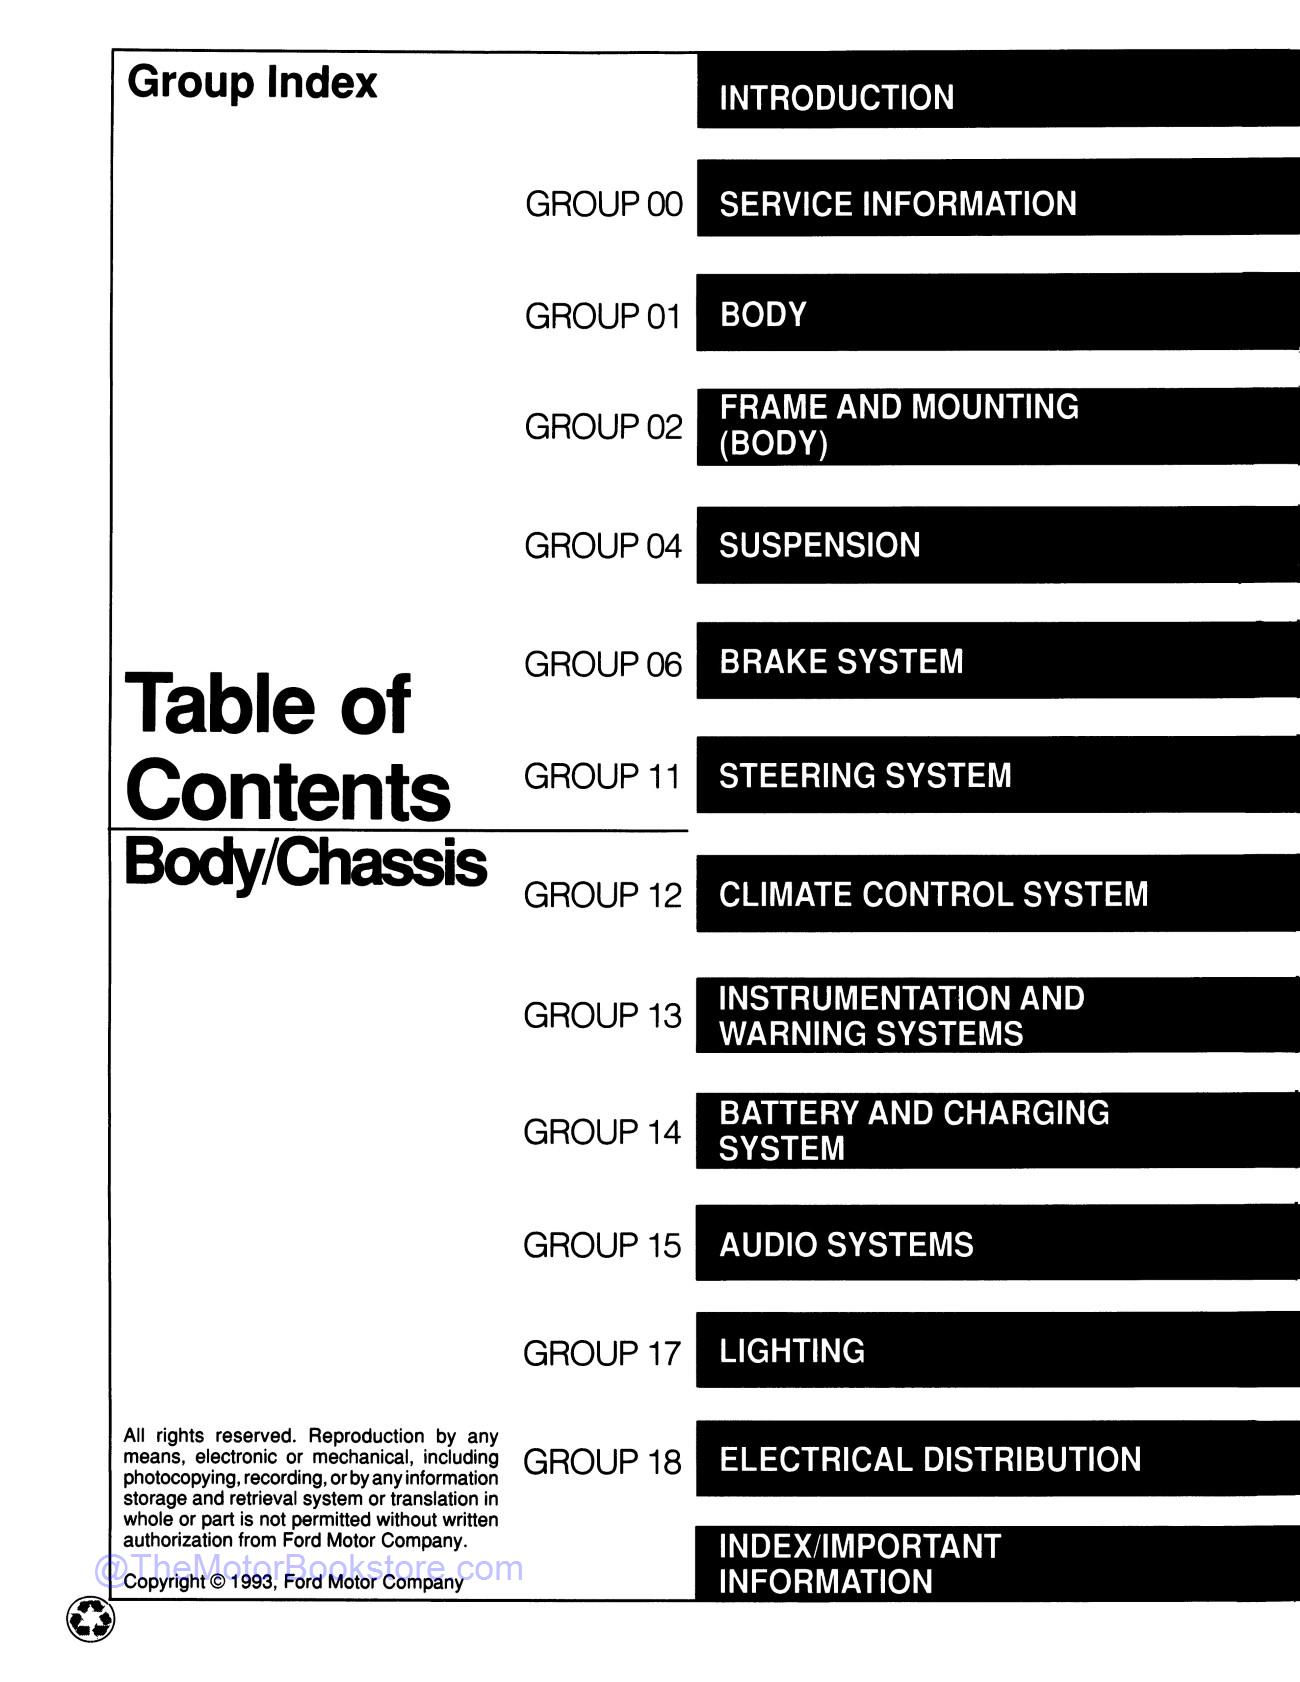 1994 Ford Truck Service Manual - F-150-350, F-Super Duty, Bronco, & Econoline  - Table of Contents 1